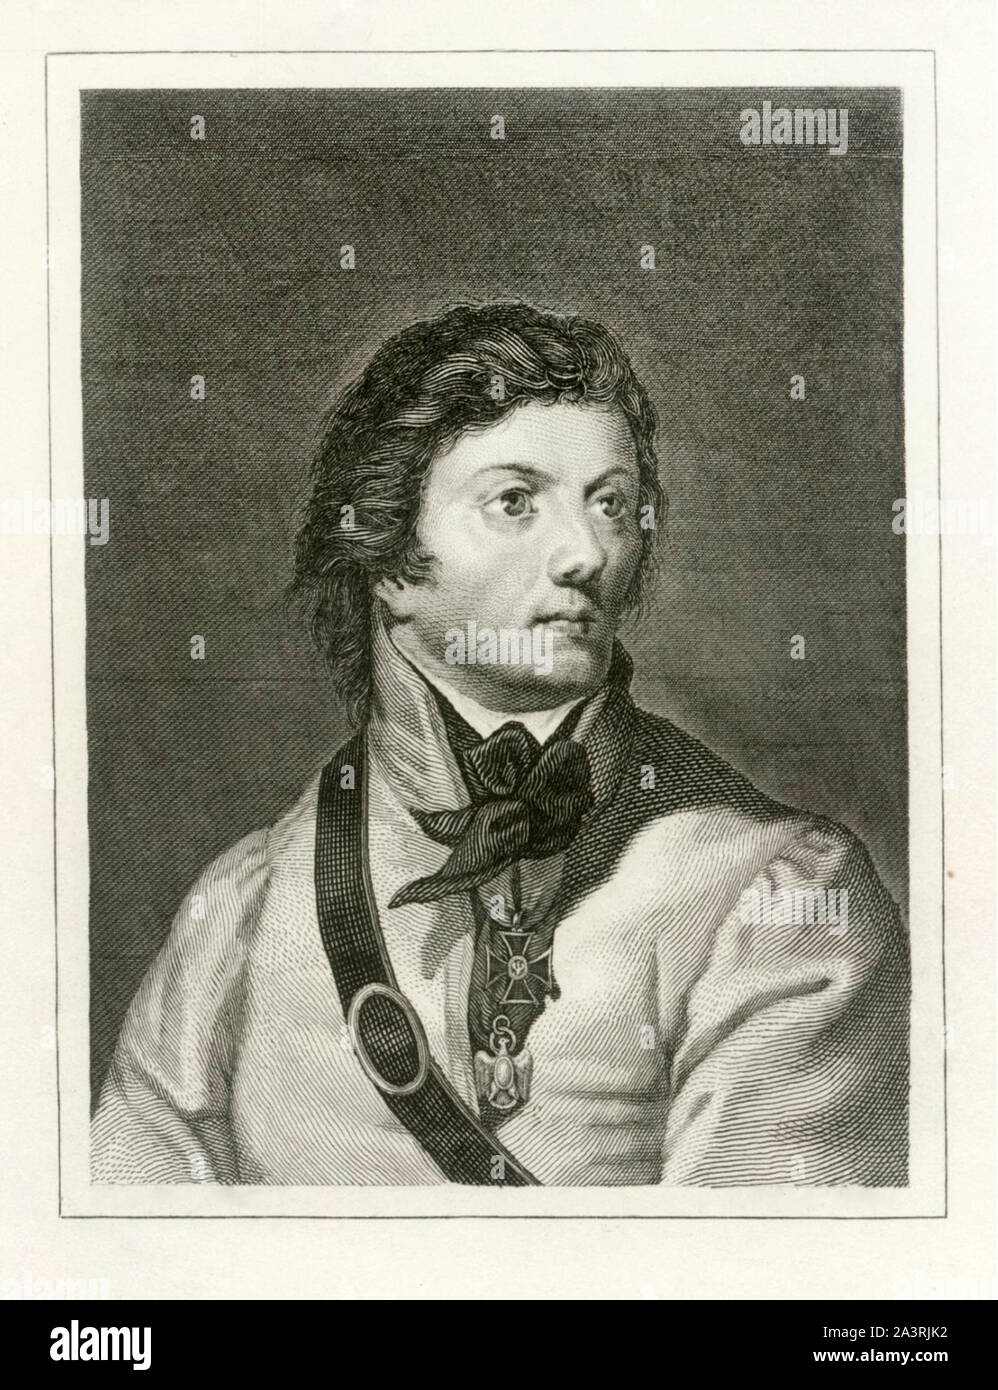 Andrzej Tadeusz Bonawentura Kosciuszko (Andrew Thaddeus Bonaventure Kosciuszko; 1746 – 1817) was a Polish-Lithuanian military engineer, statesman, and Stock Photo